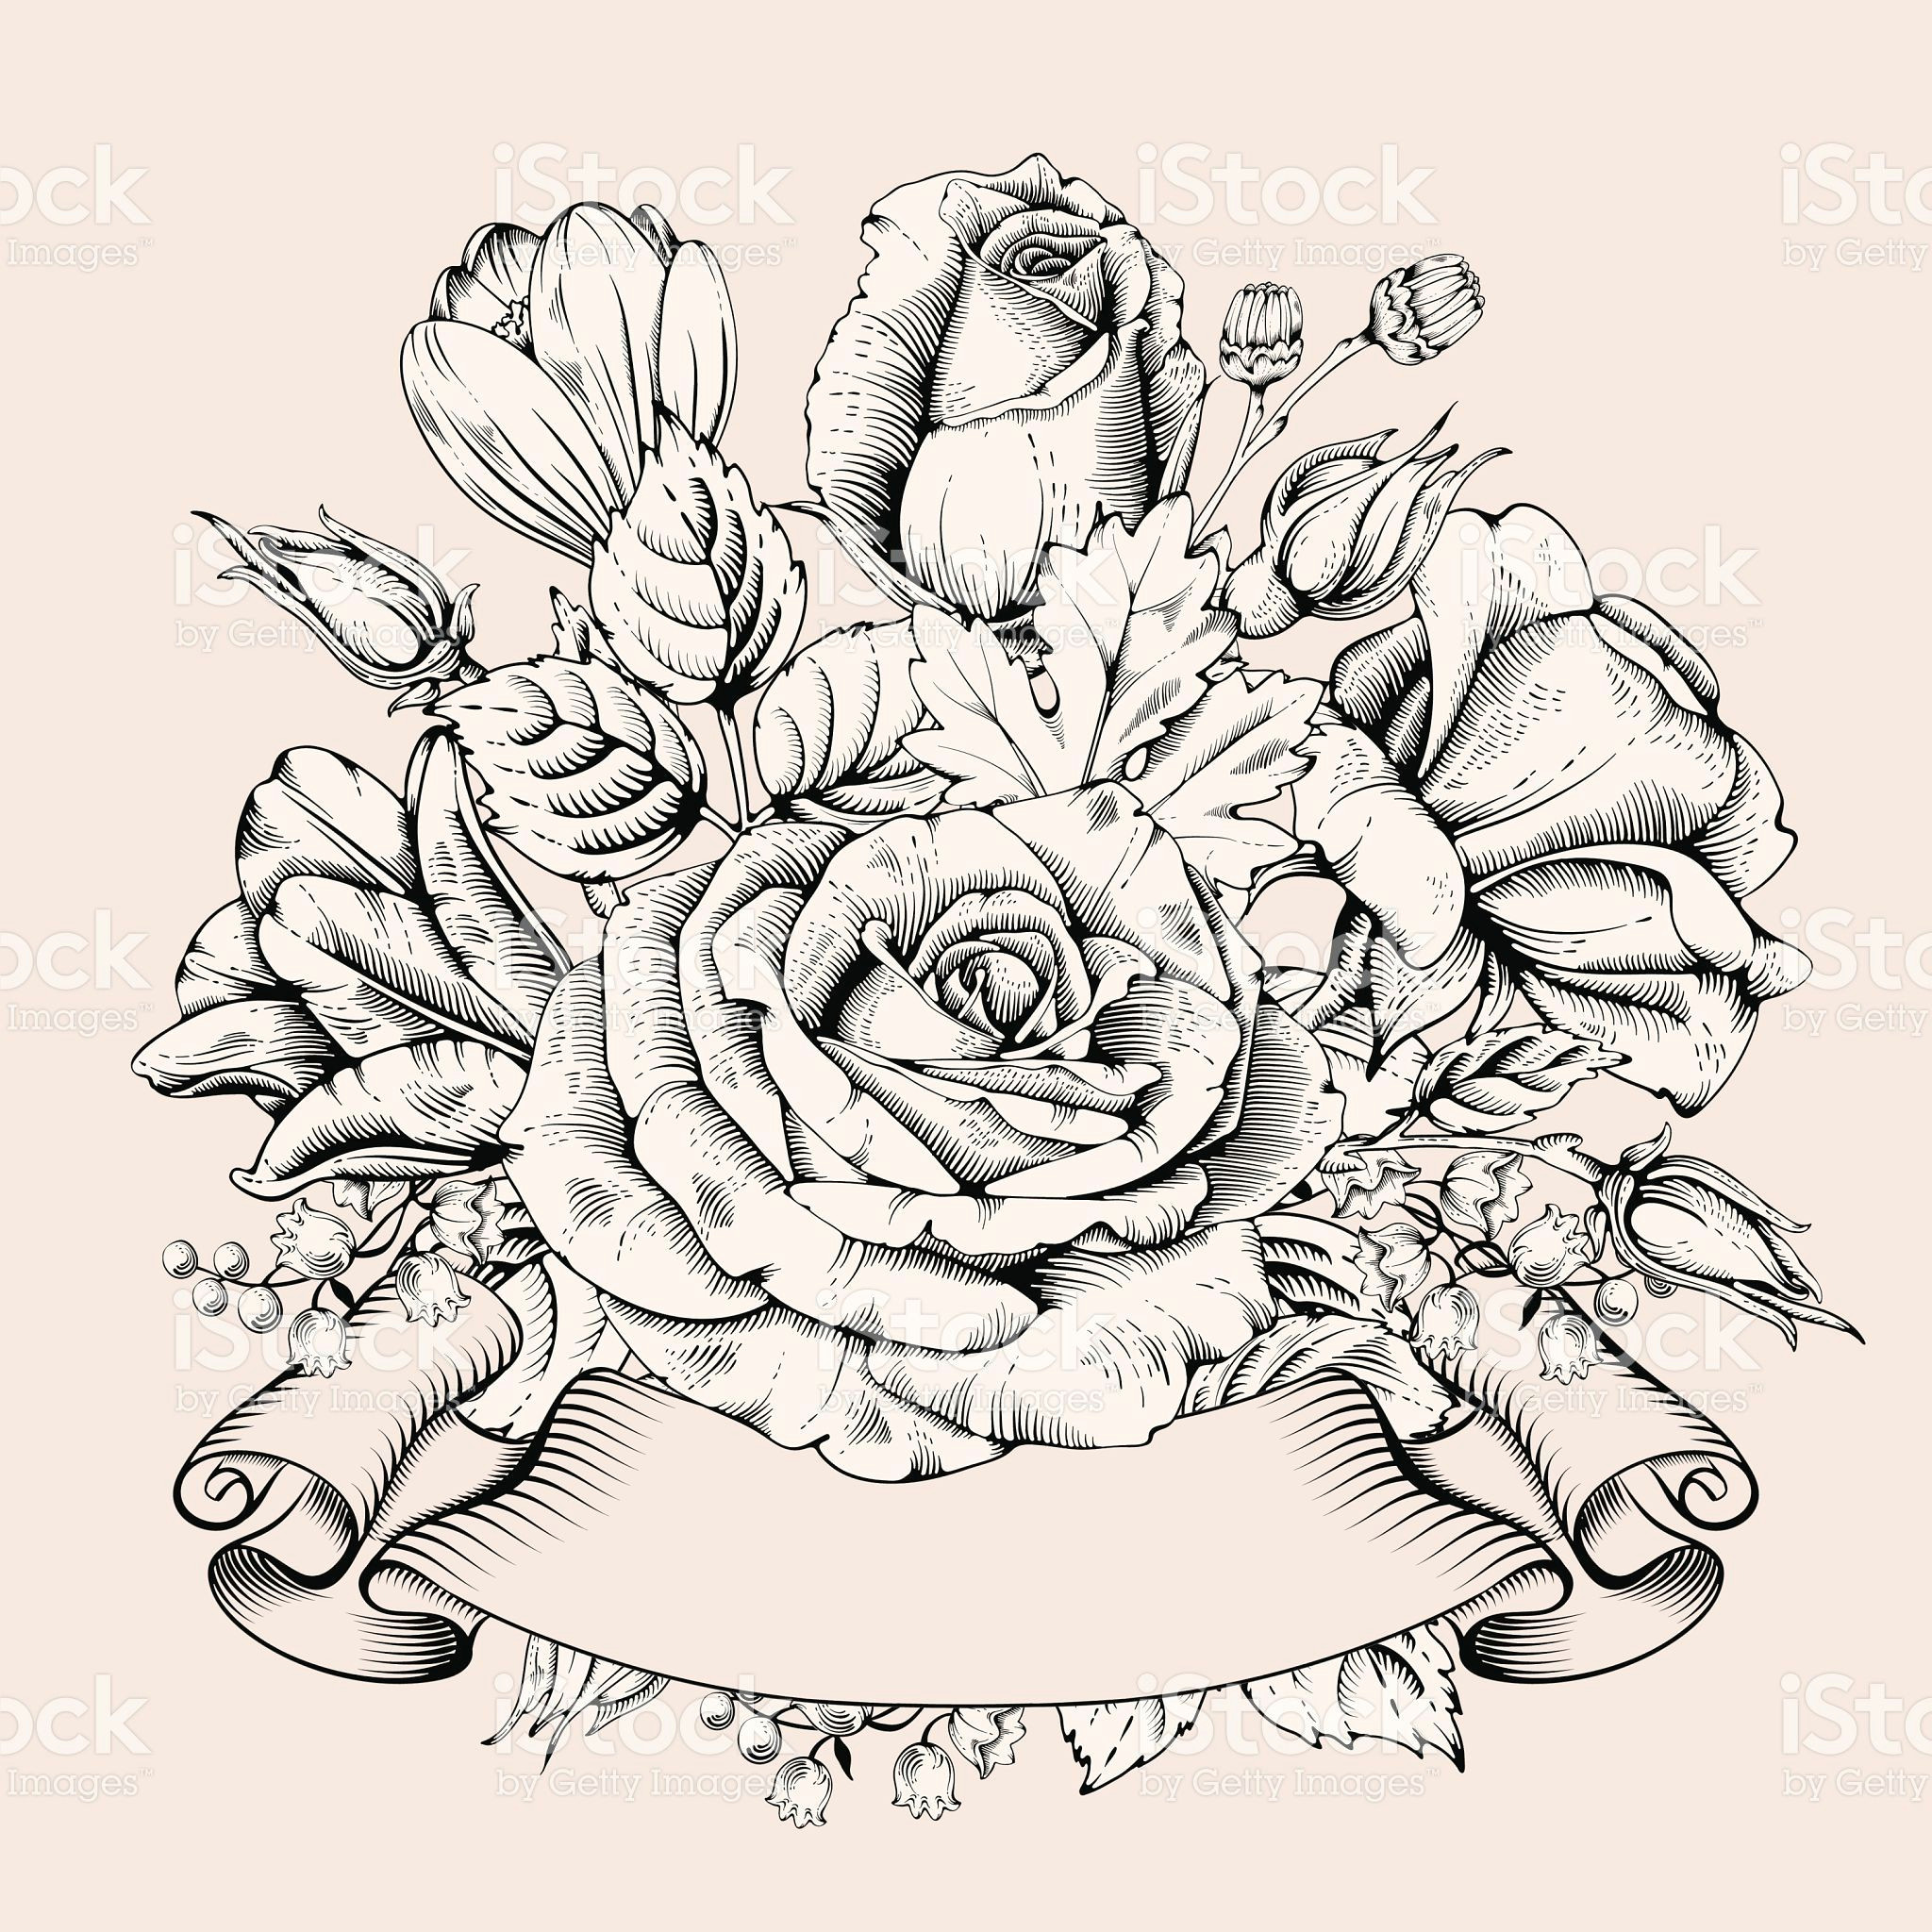 Drawings Of Blooming Flowers Vintage Luxury Card with Detailed Hand Drawn Flowers Blooming Rose